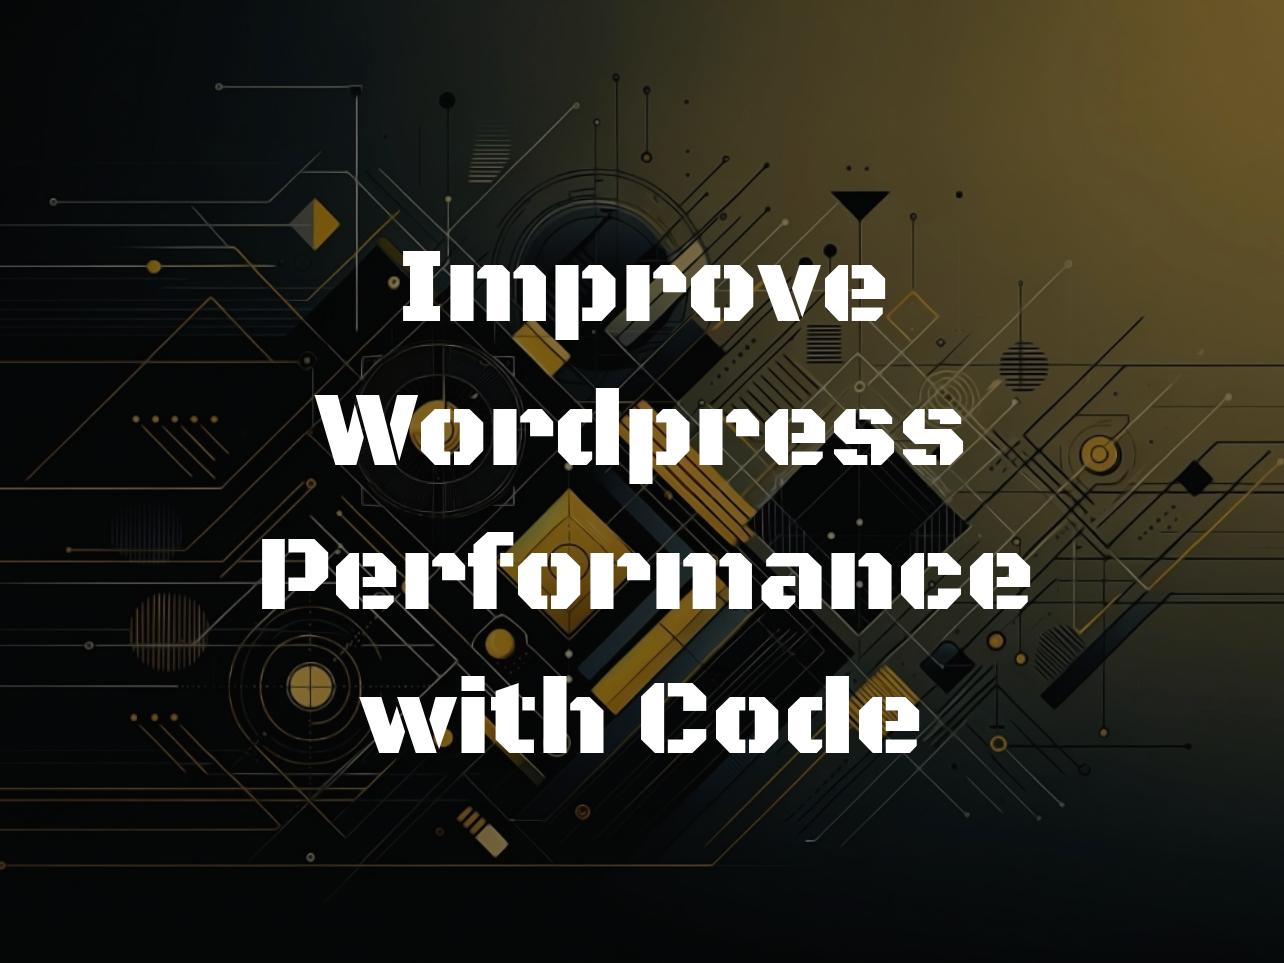 Improve WordPress Performance with Code